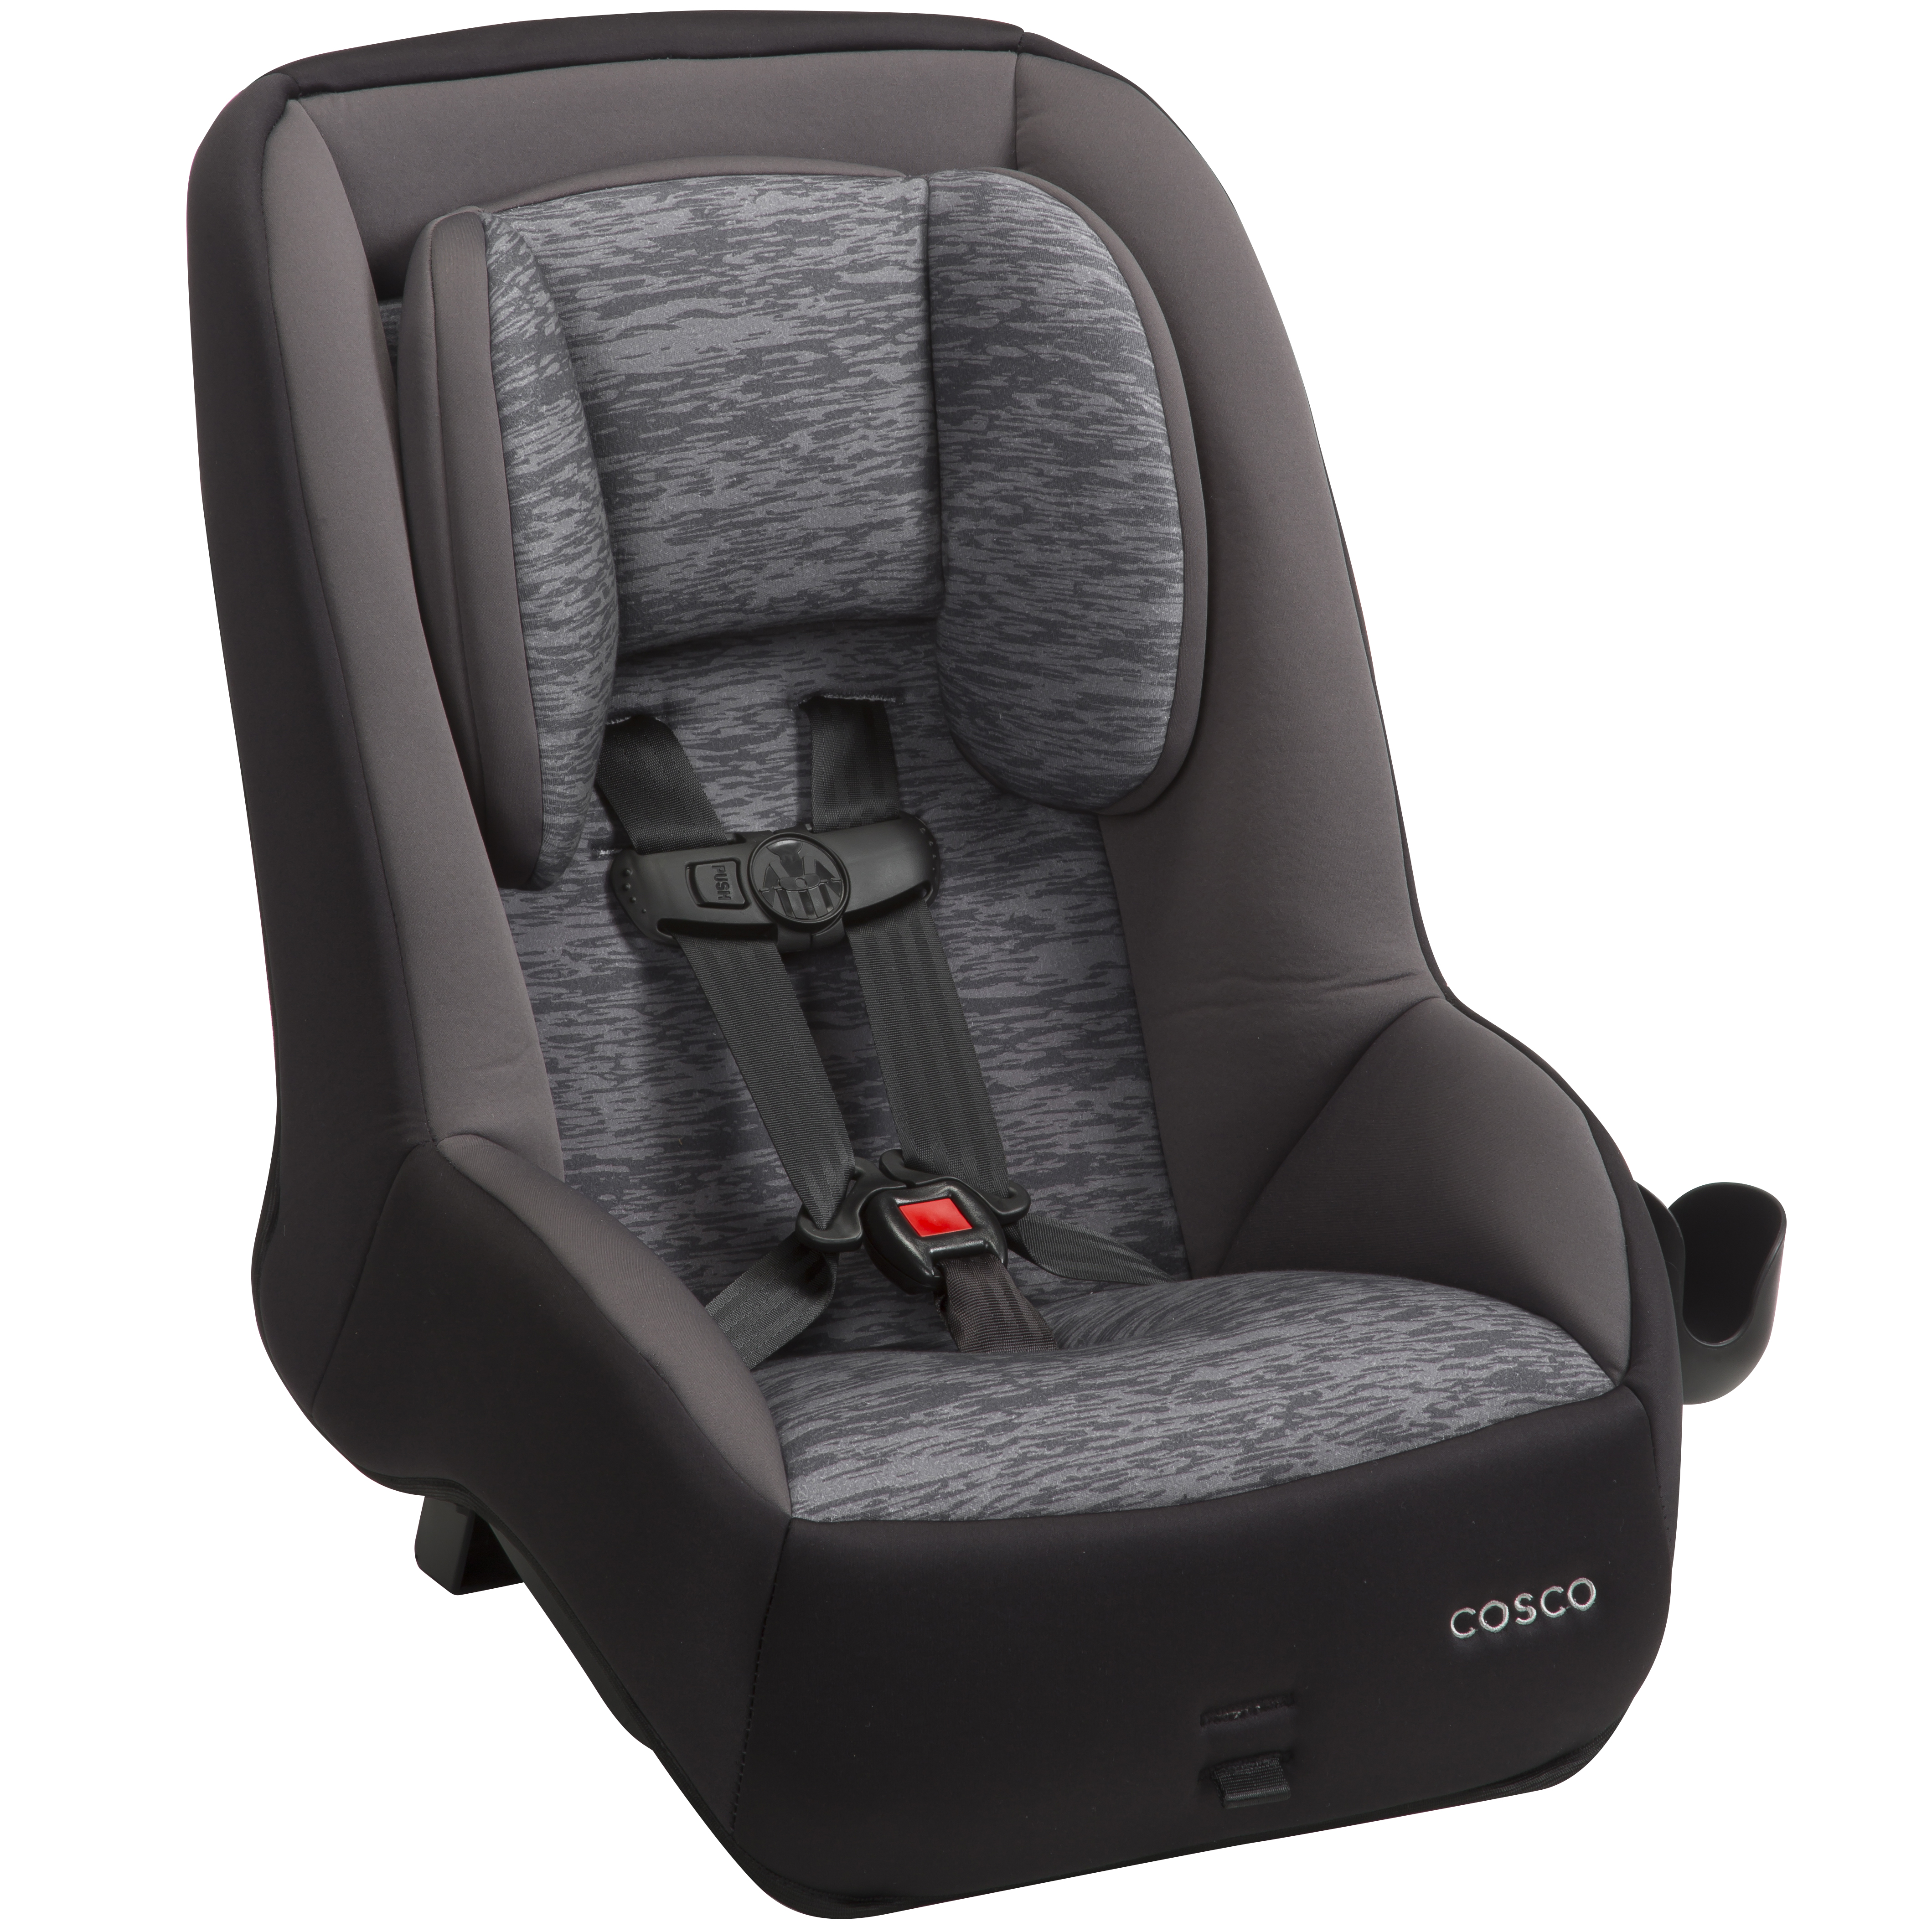 Cosco Car Seat Replacement Straps | Brokeasshome.com